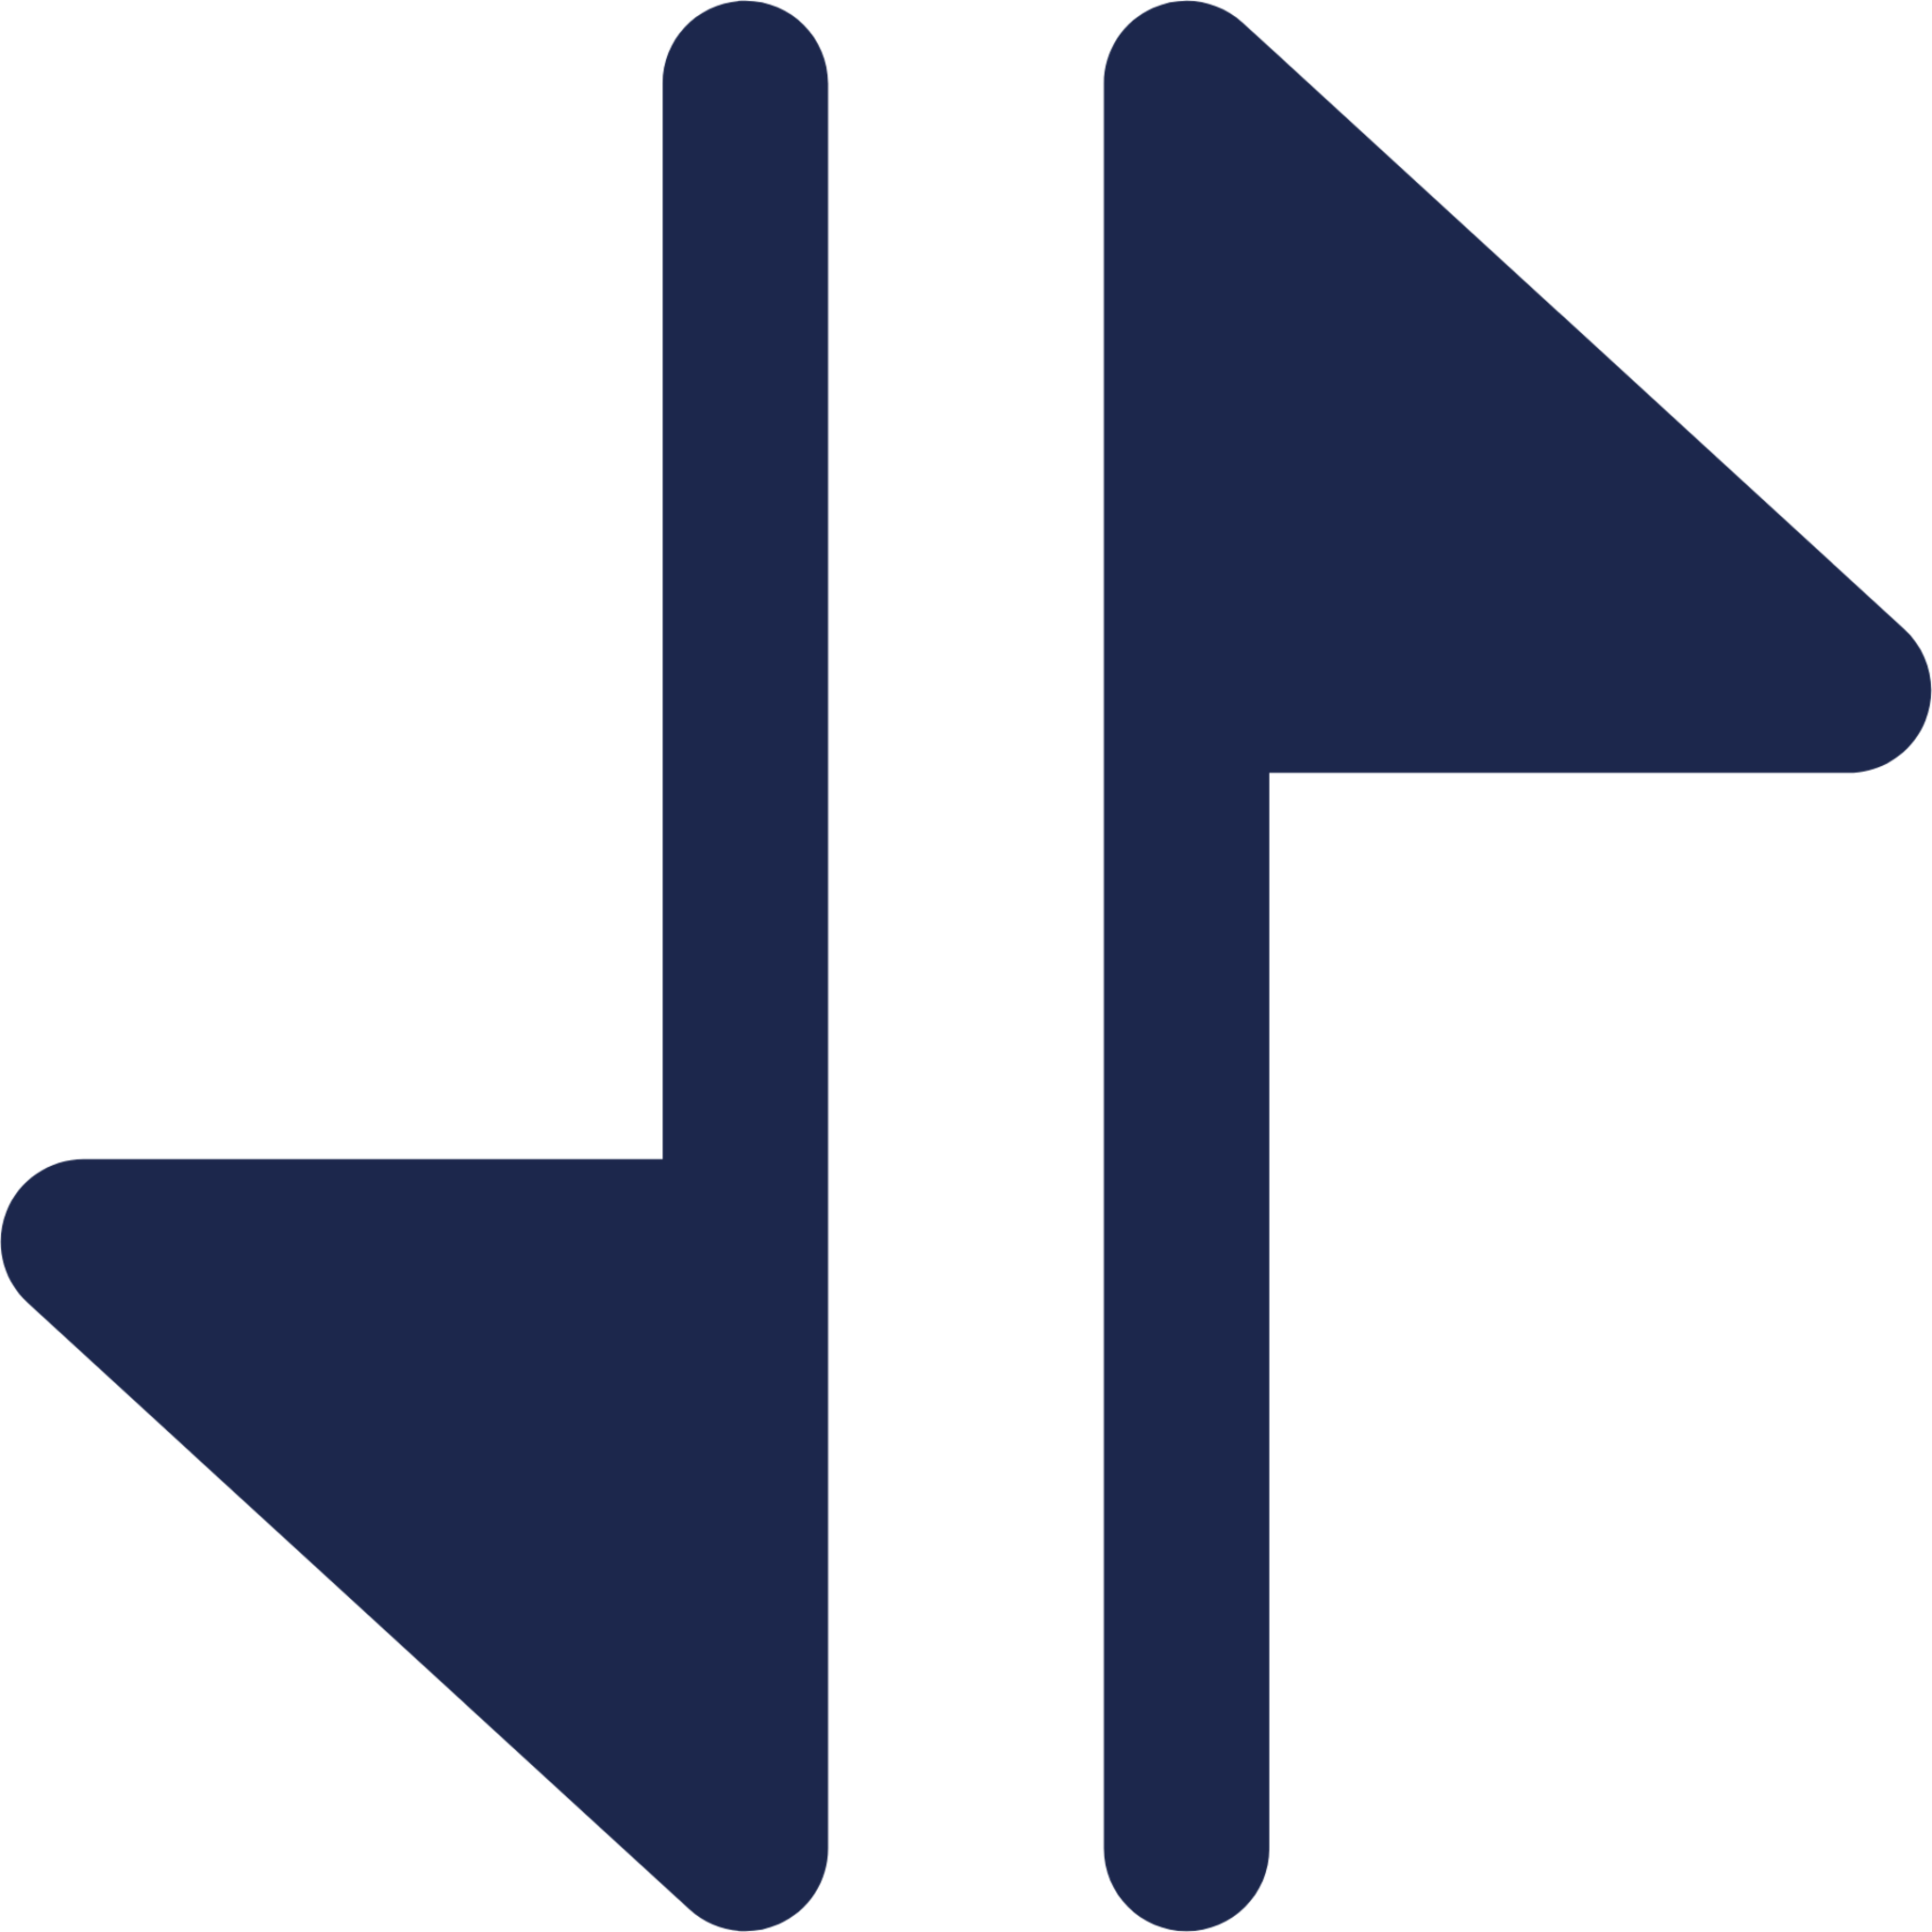 Transfer Vertical icon